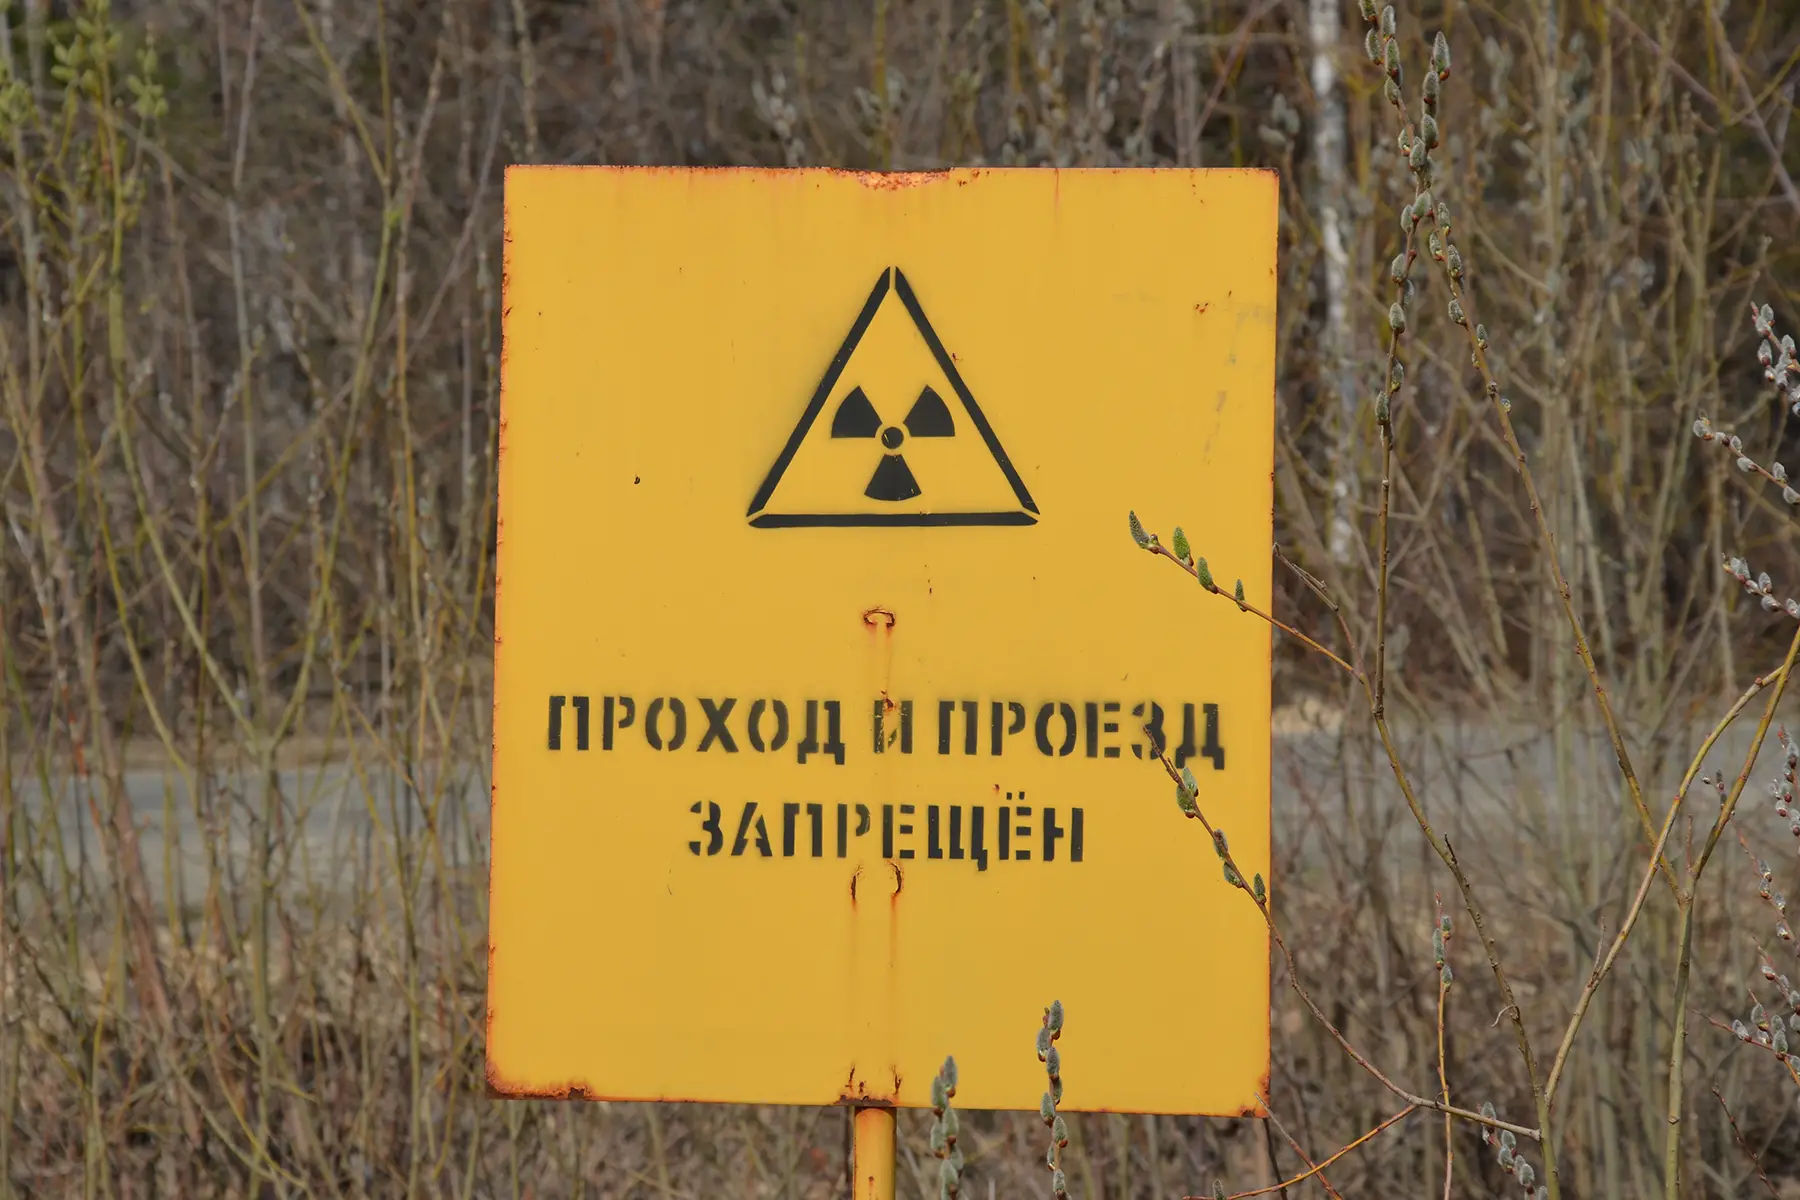 Access forbidden sign at Mayak, Chelyabinsk 